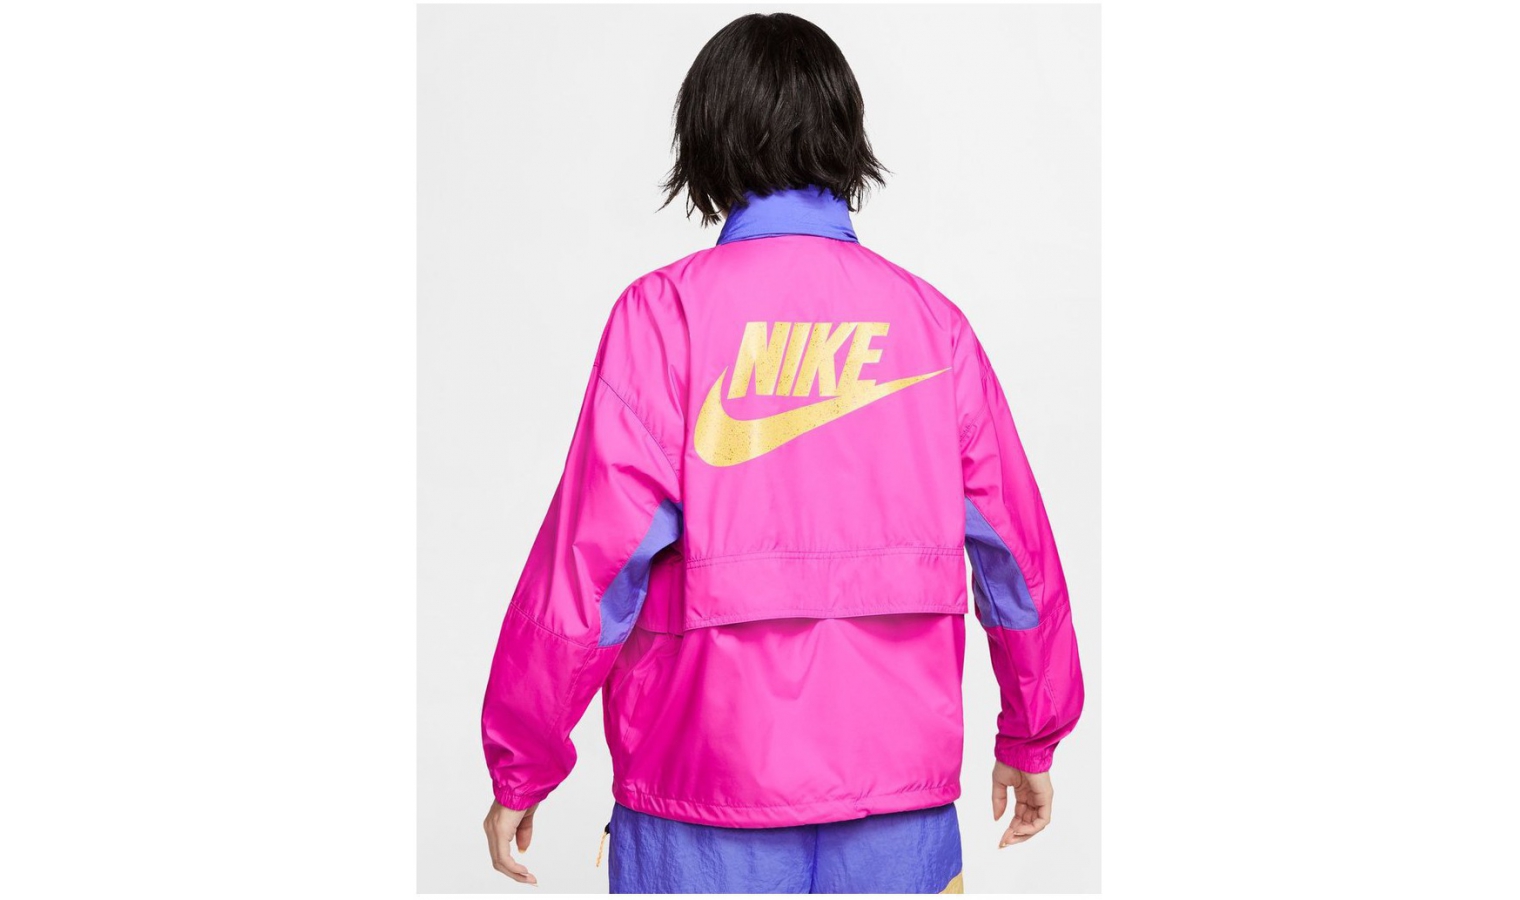 Comité busto Inducir Womens leisure jacket Nike SPORTSWEAR W pink | AD Sport.store